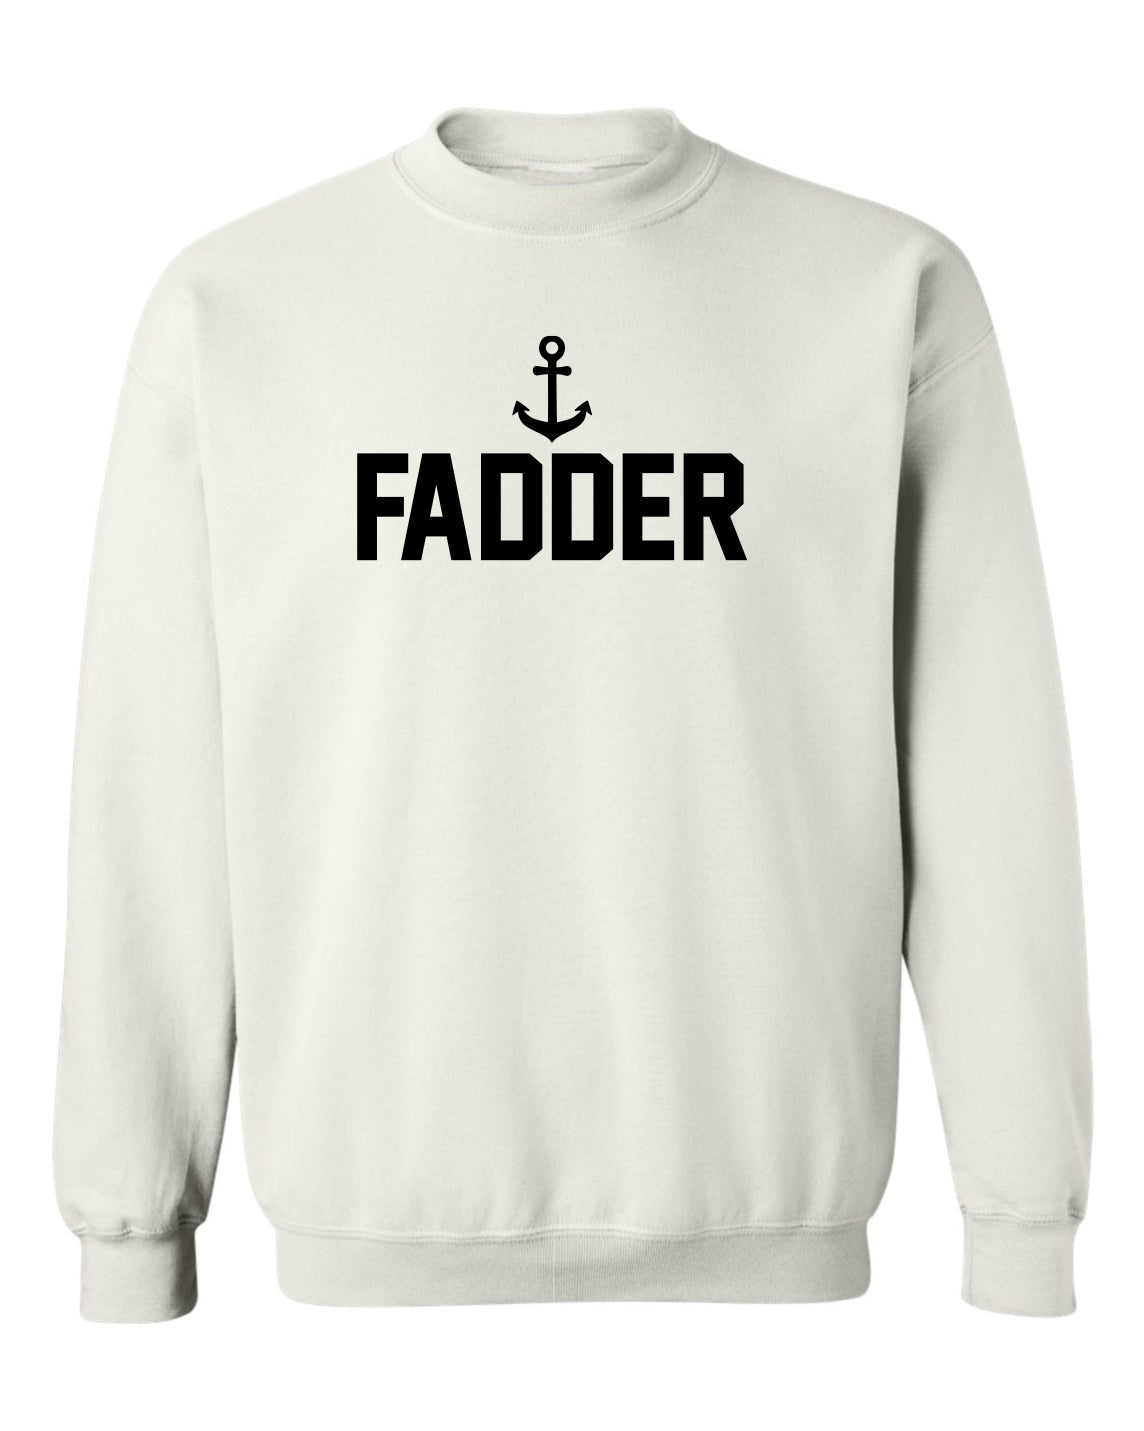 "Fadder" Unisex Crewneck Sweatshirt